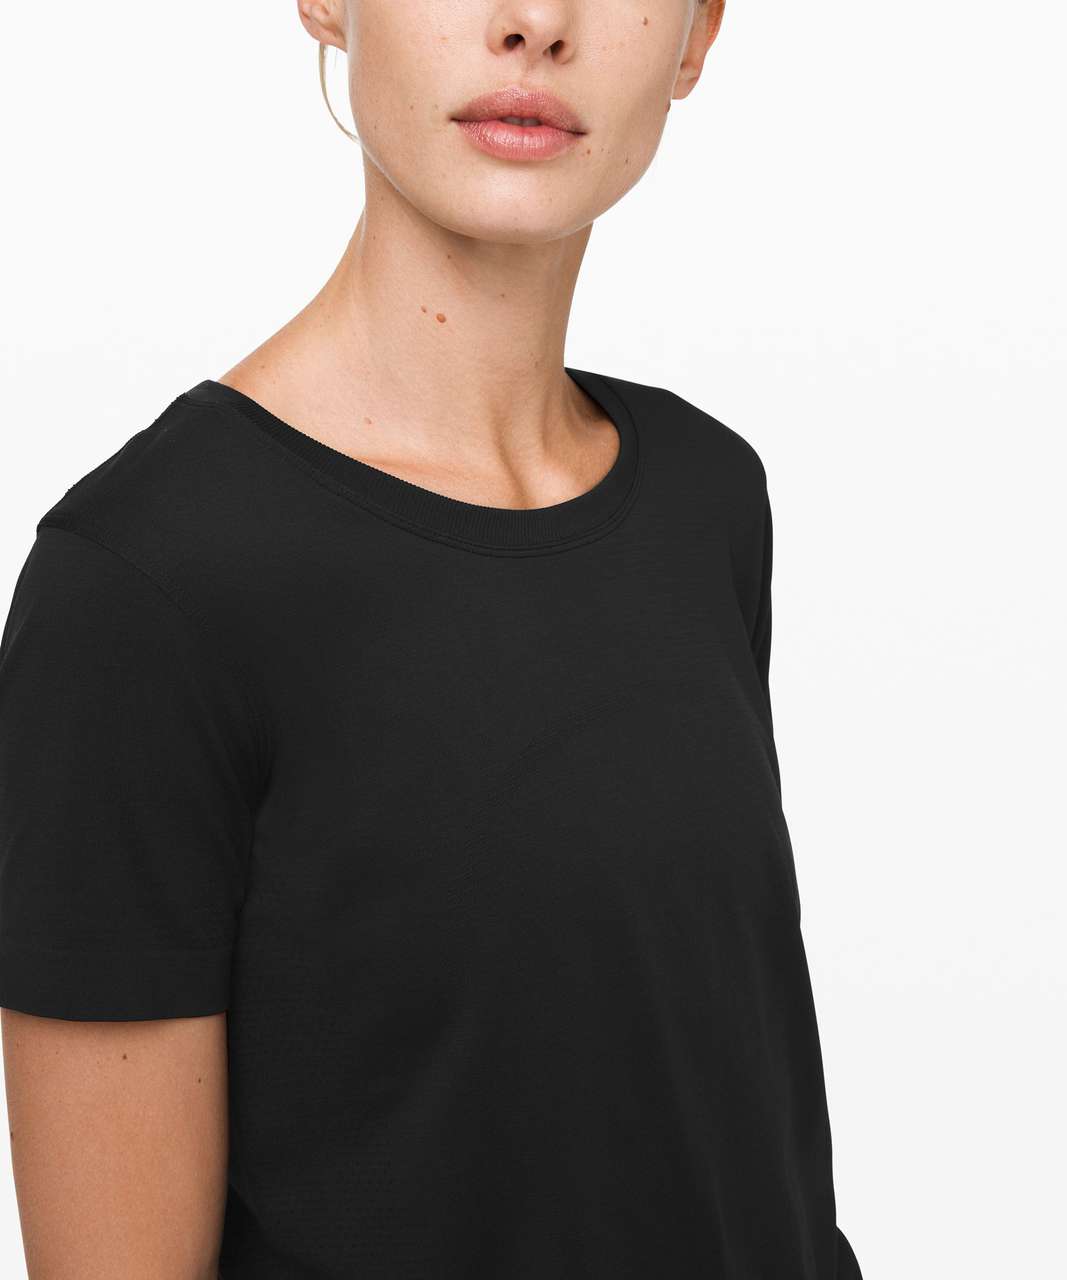 Lululemon Swiftly Relaxed-Fit Short Sleeve T-Shirt - Black / Black